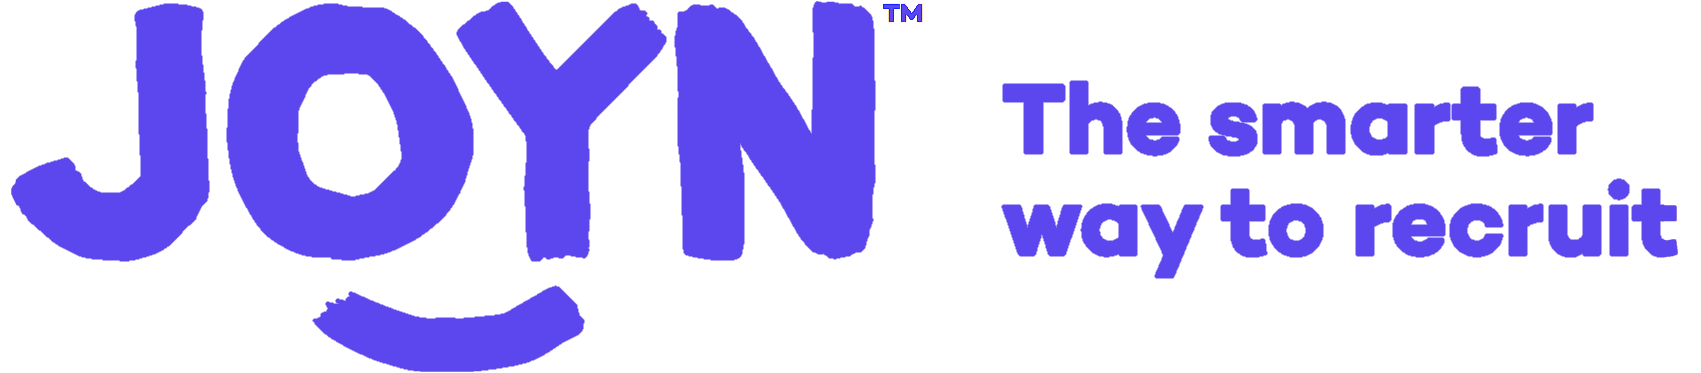 JOYN Logo - The Smarter Way to Recruit